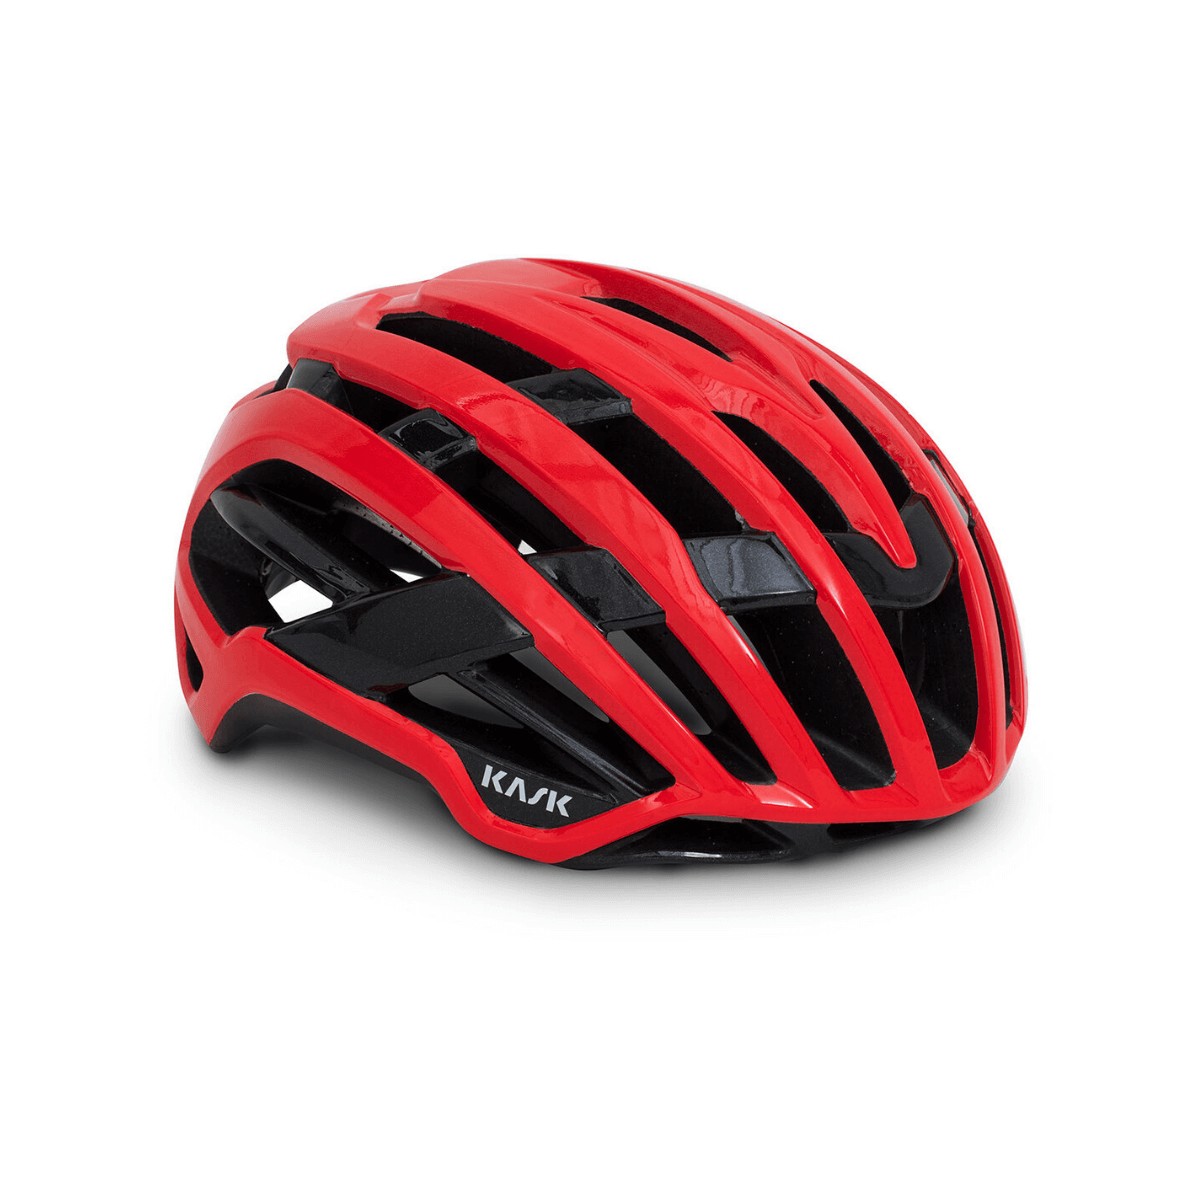 Kask Valegro Red Helmet, Size L